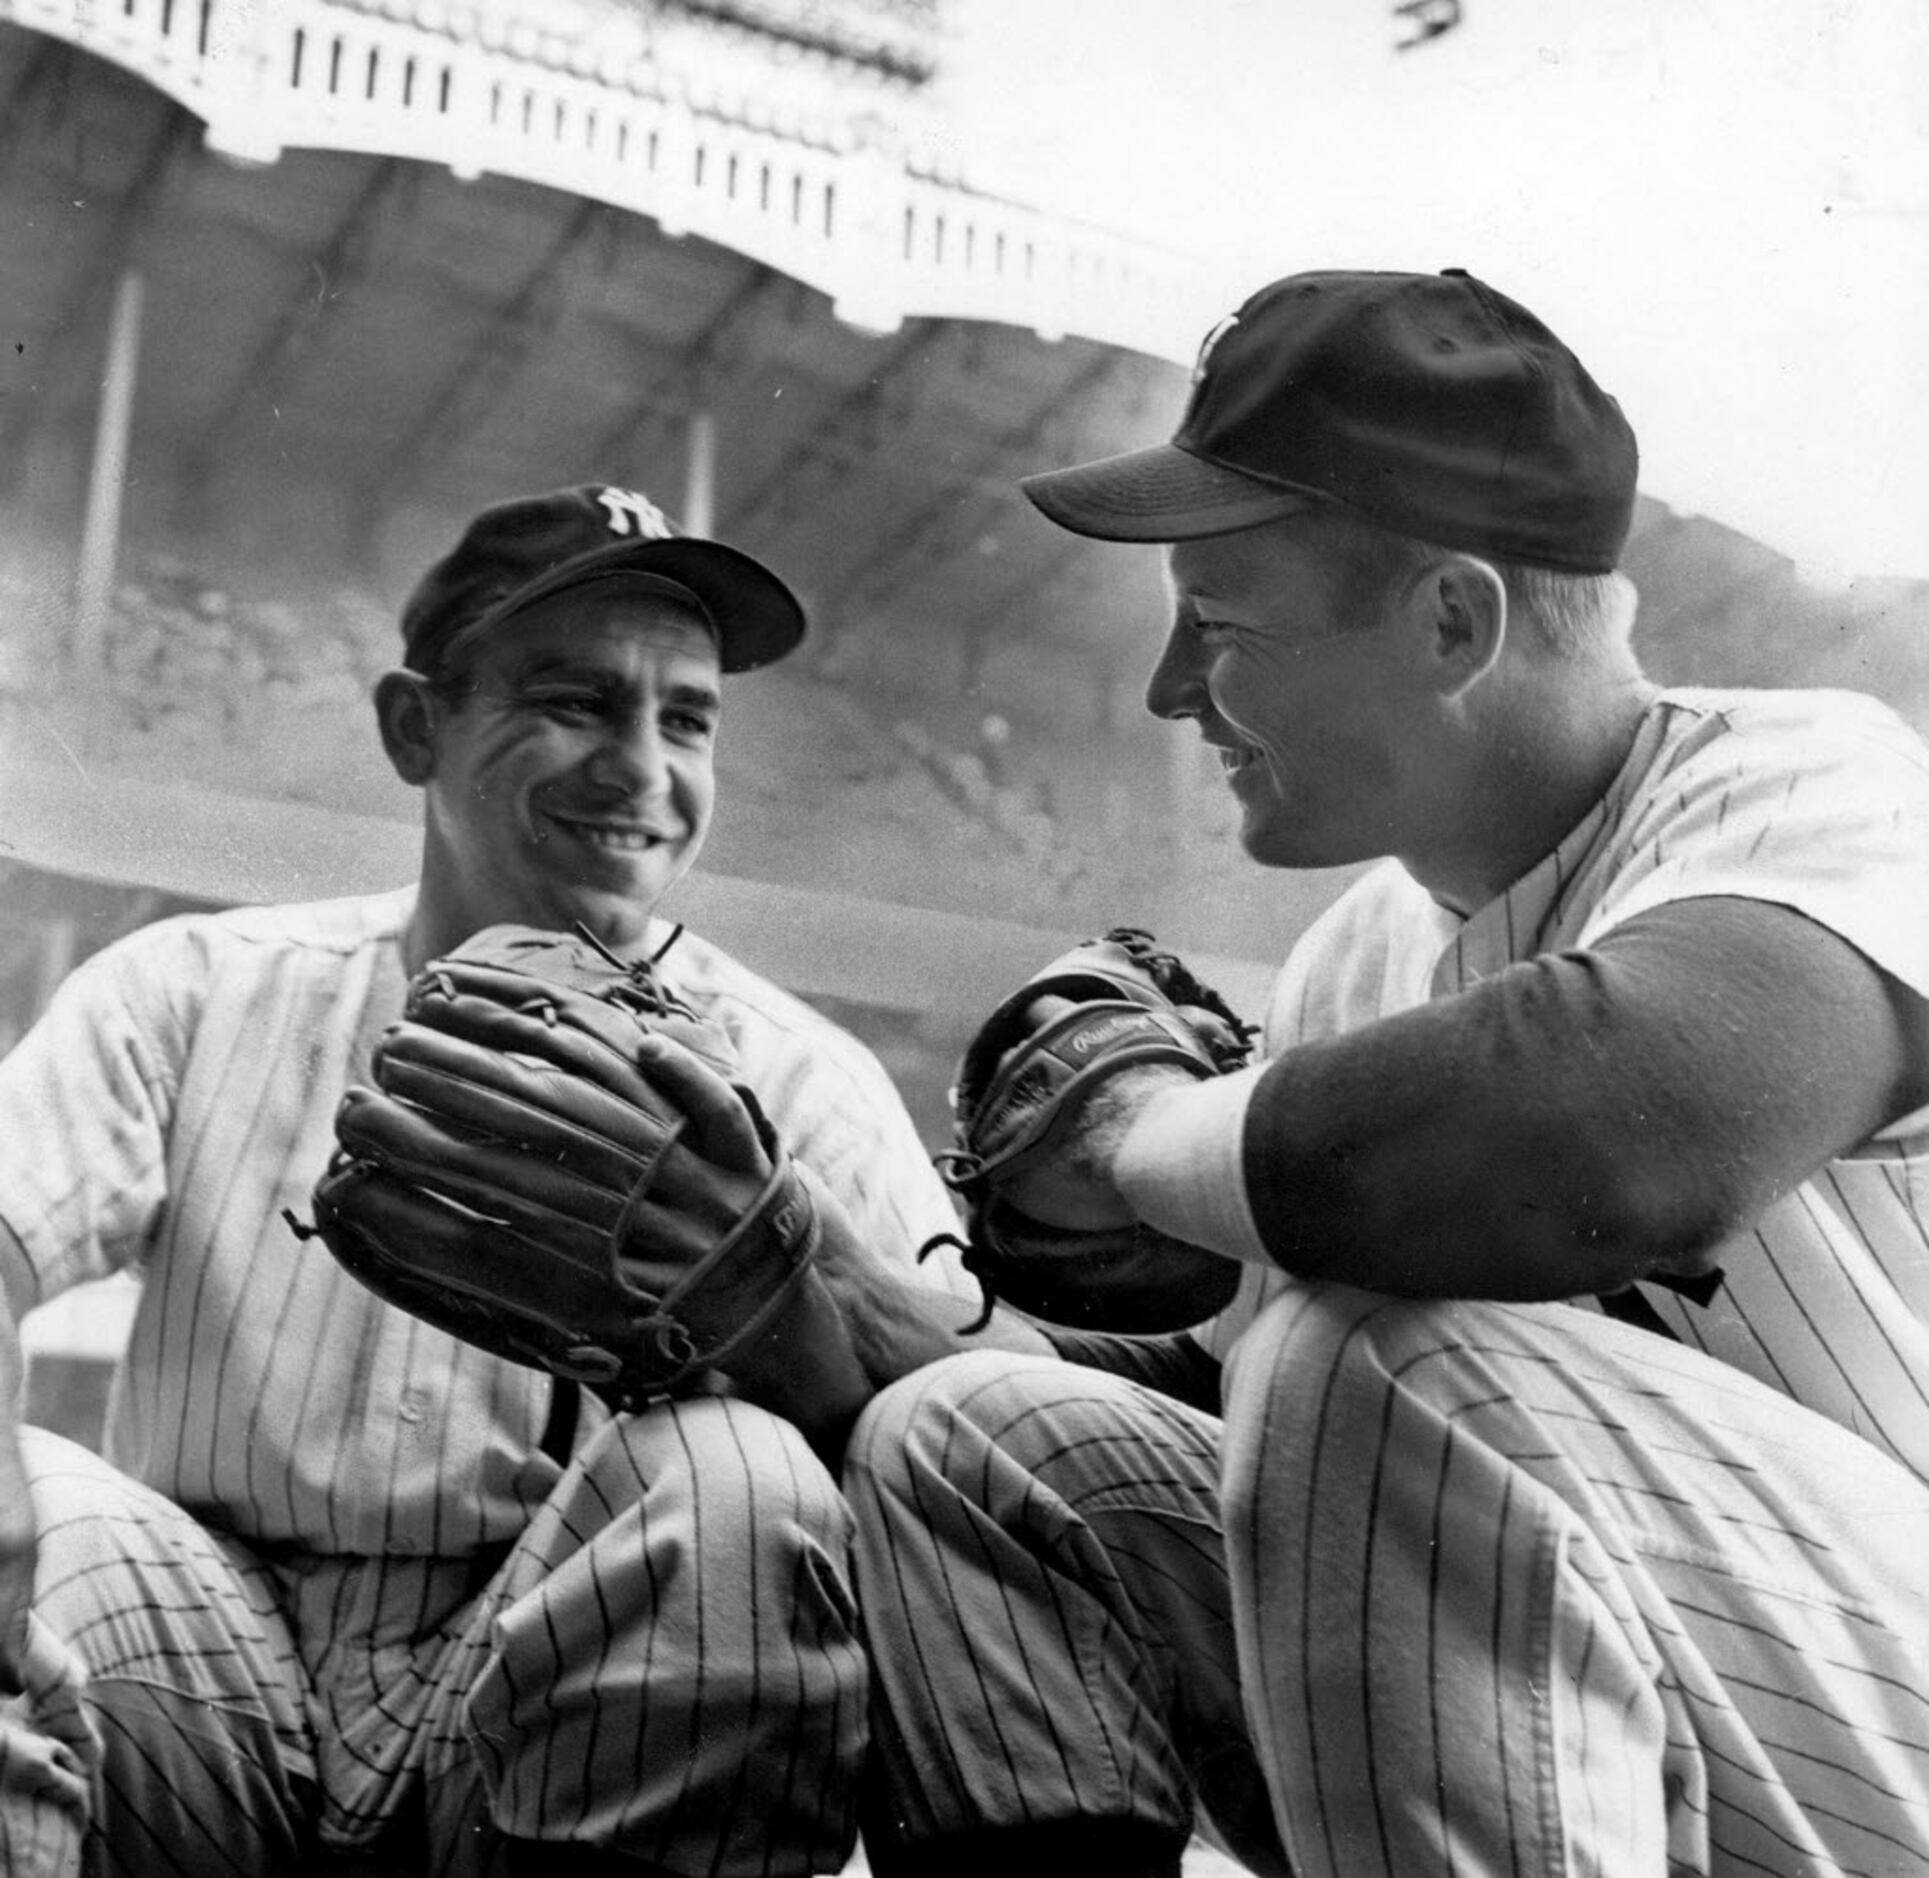 Yankees Hall of Fame catcher Yogi Berra dies at 90